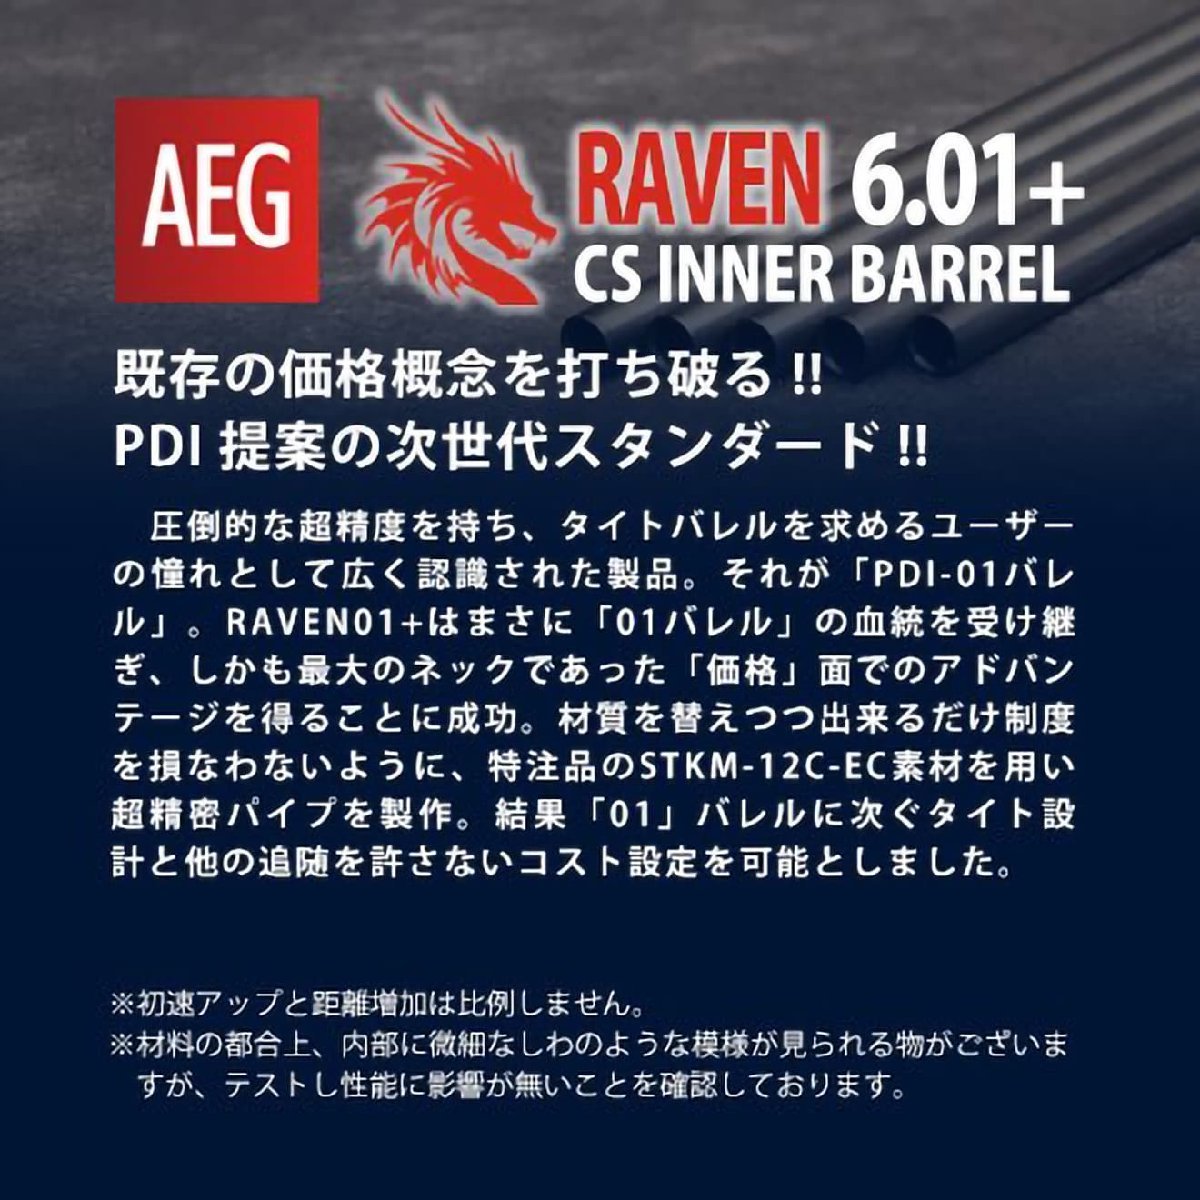 PD-AE-133 PDI RAVENシリーズ 01+ AEG 精密インナーバレル(6.01±0.007) 650mm マルイ PSG-1 ロングの画像3